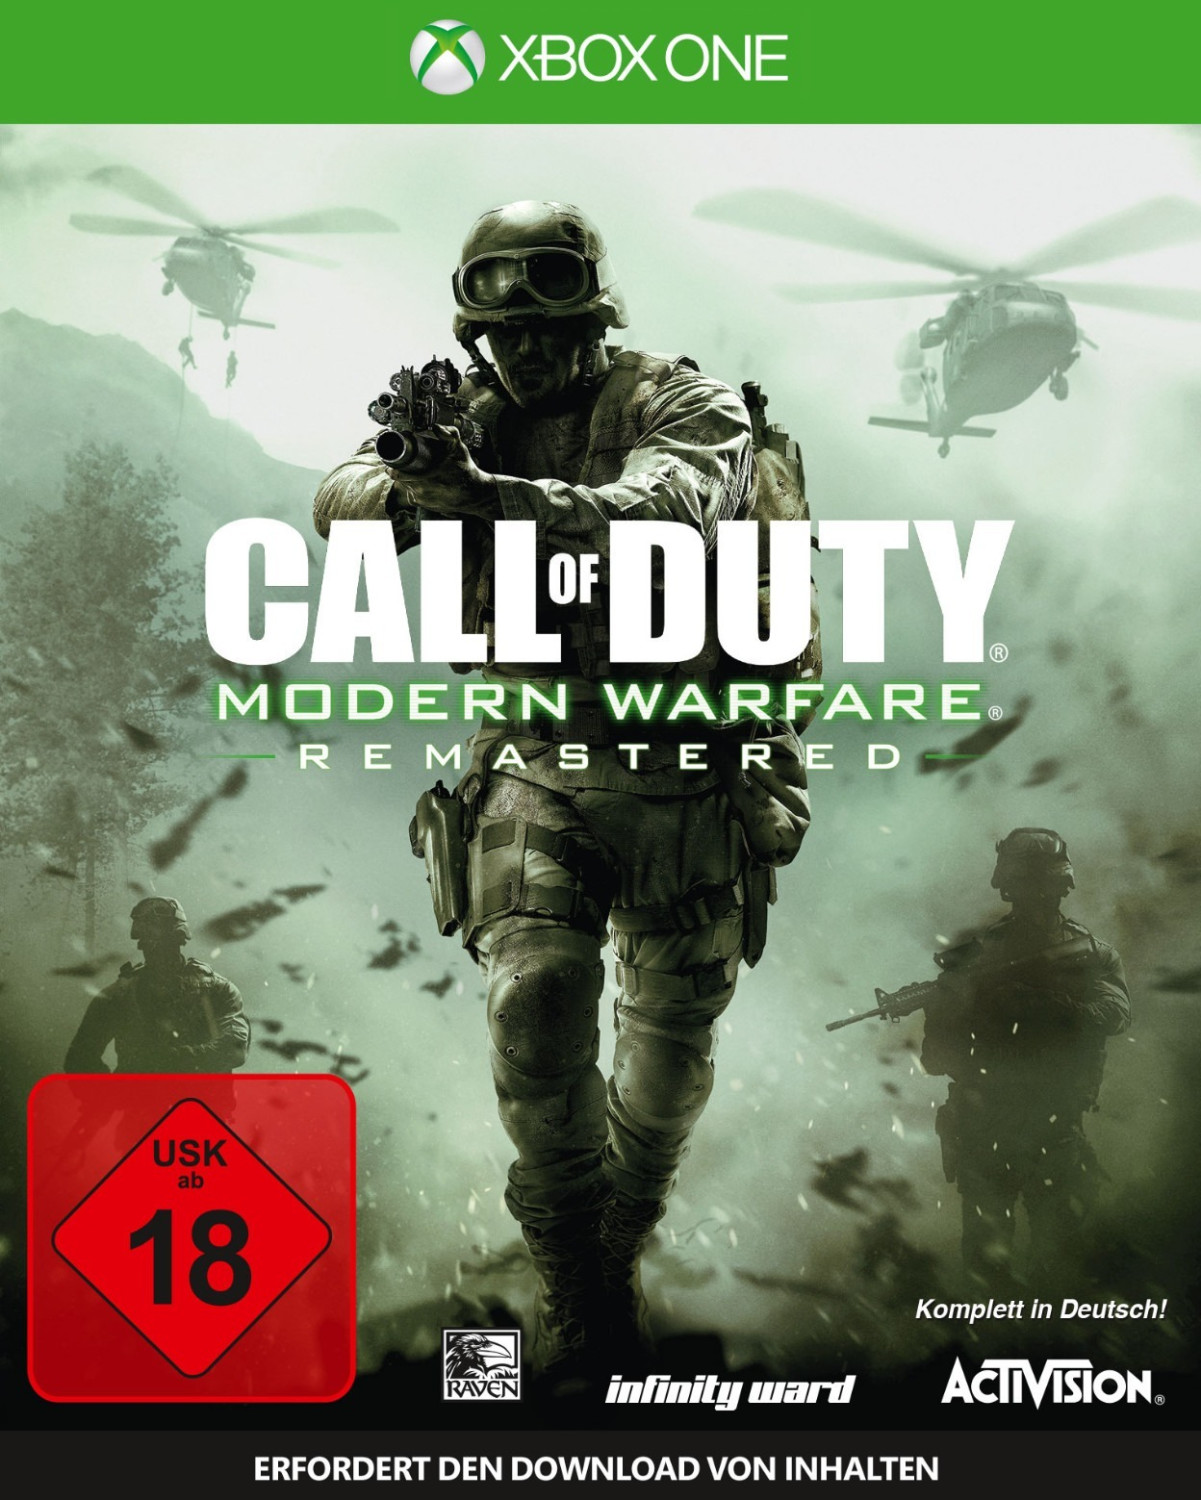 call of duty modern warfare xbox one download size